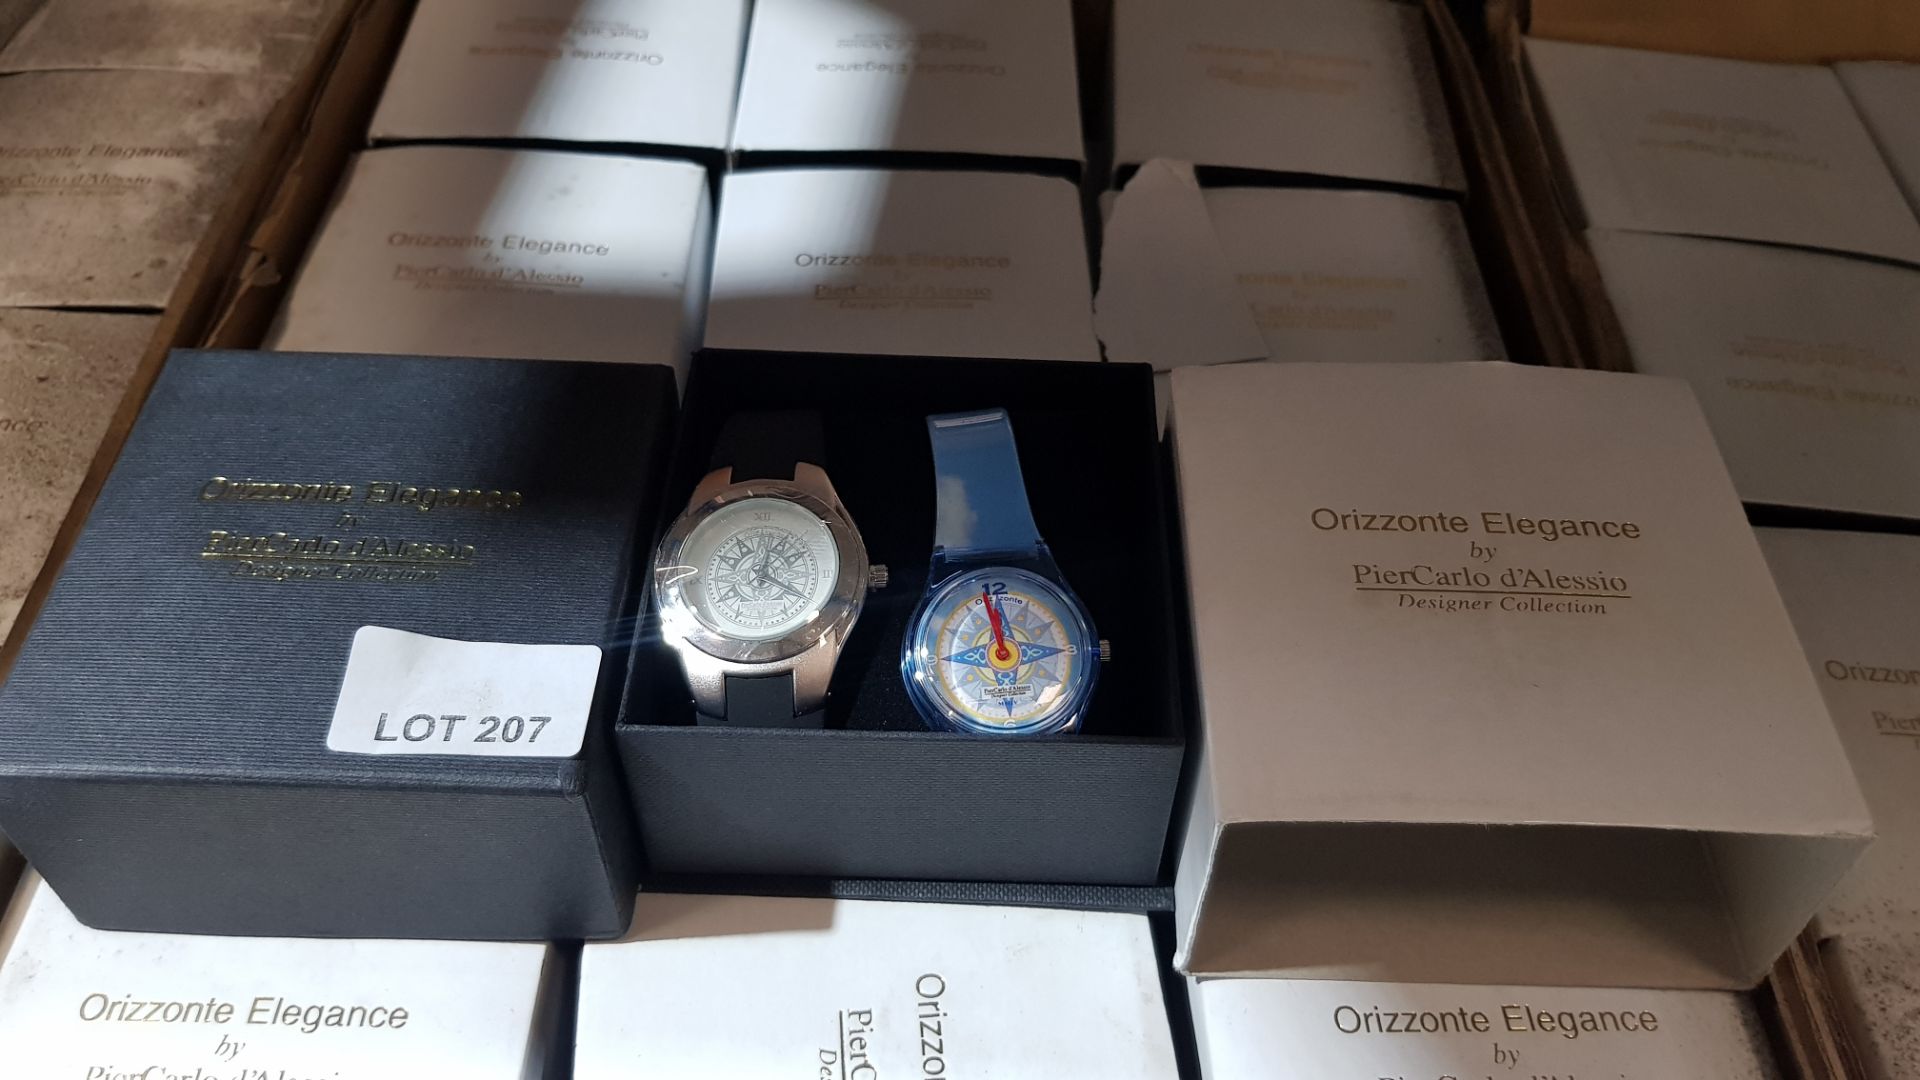 (R10B) Watches. 24 X Orizzonte Elegance by PierCarlo d’Alessio Dual Watch Set (New)